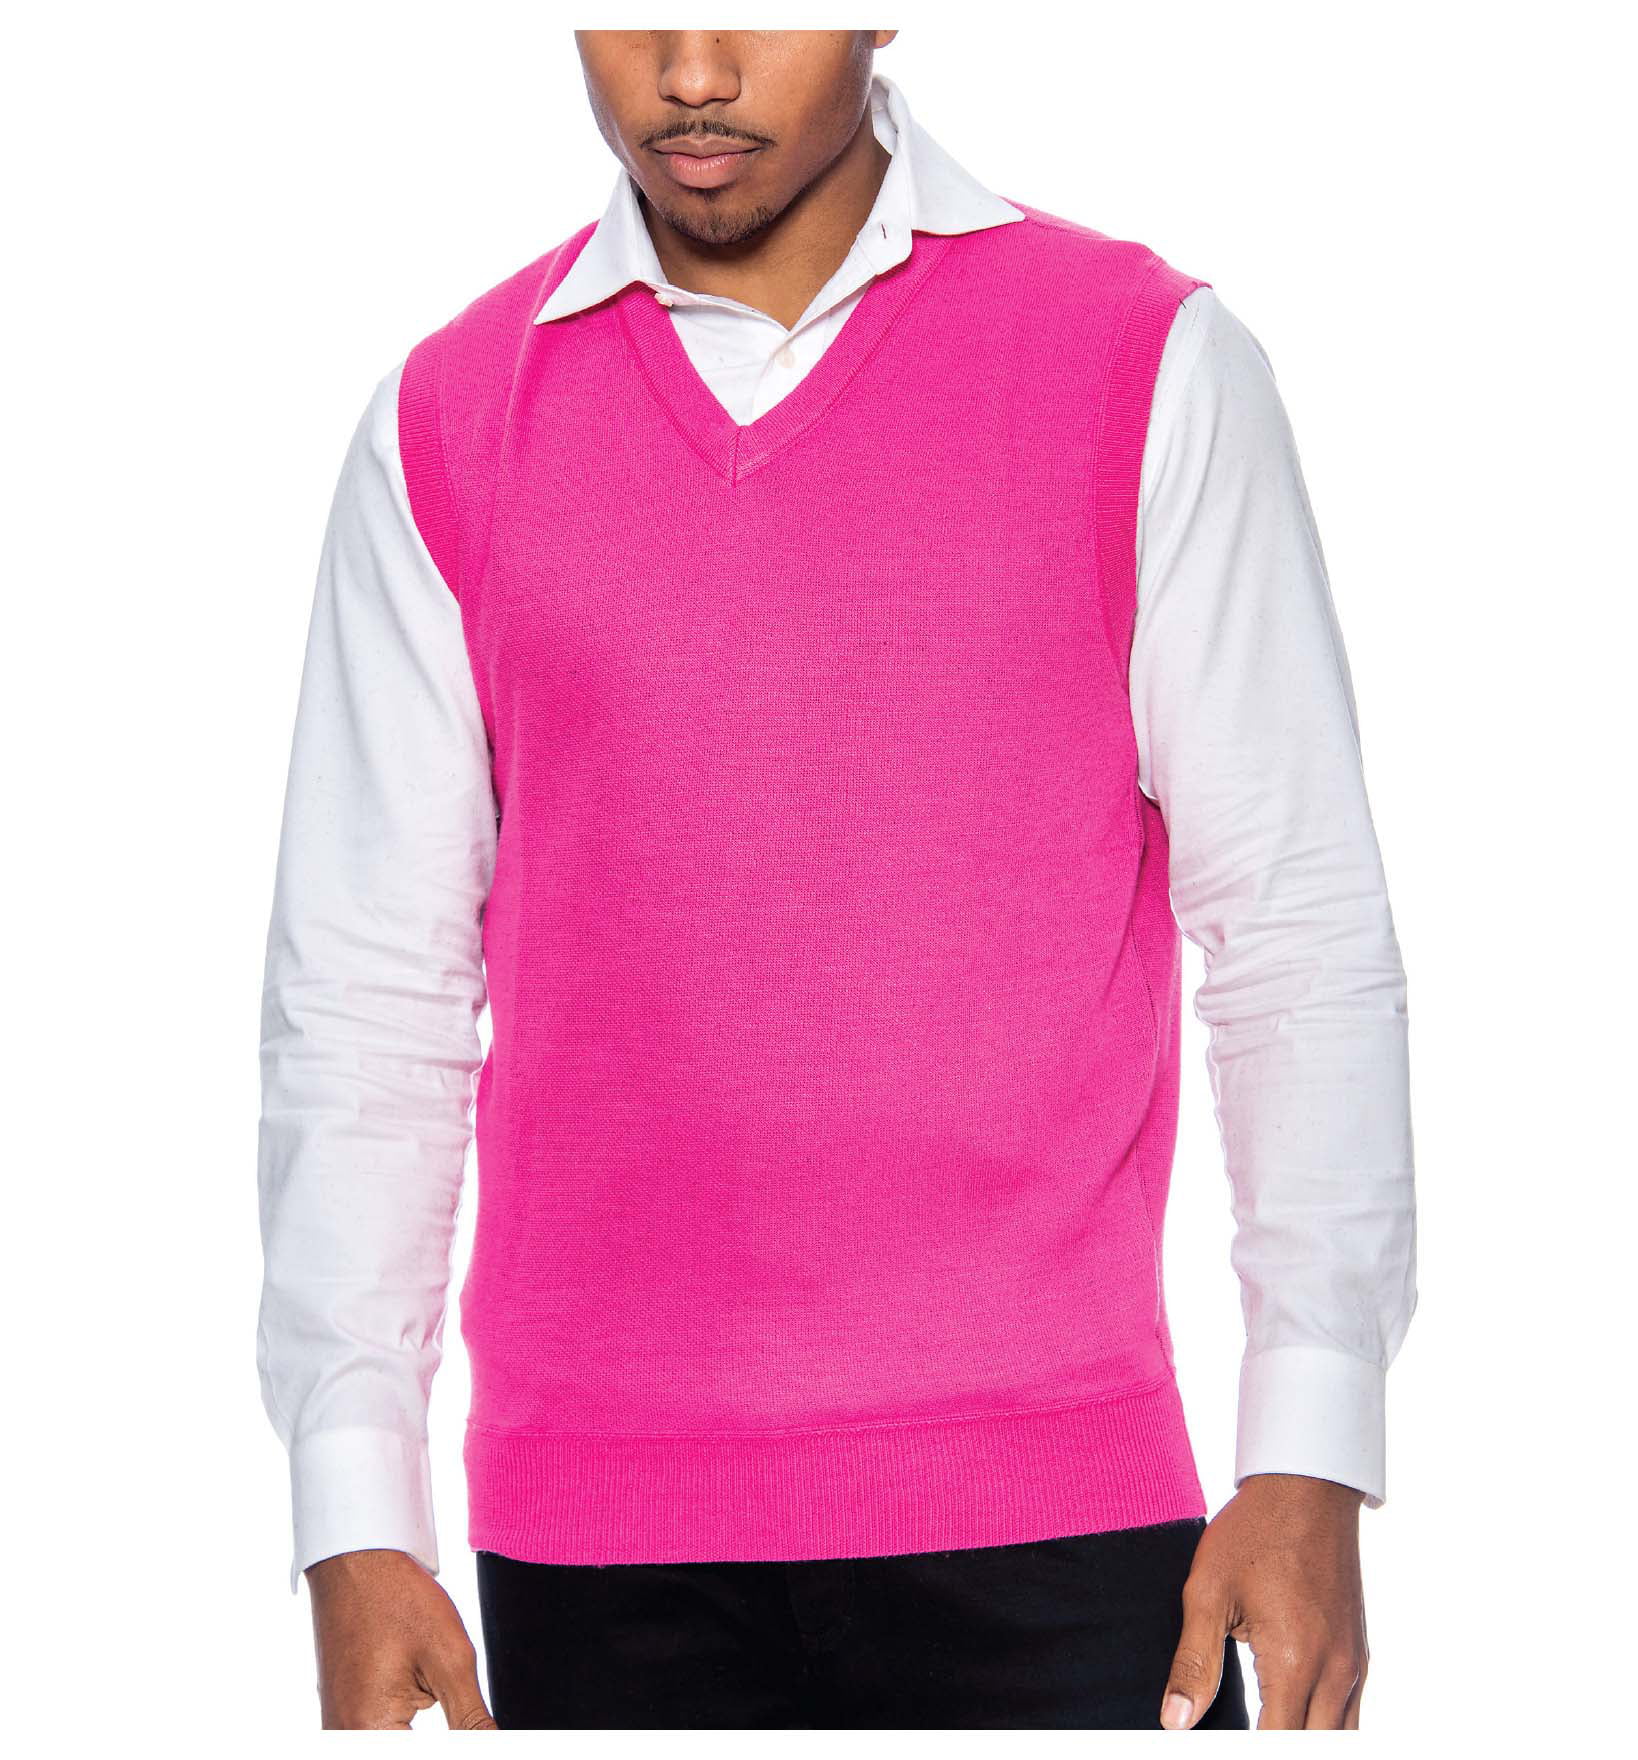 True Rock Argyle Sweater Vest (Fuchsia Pink, Large) - Walmart.com